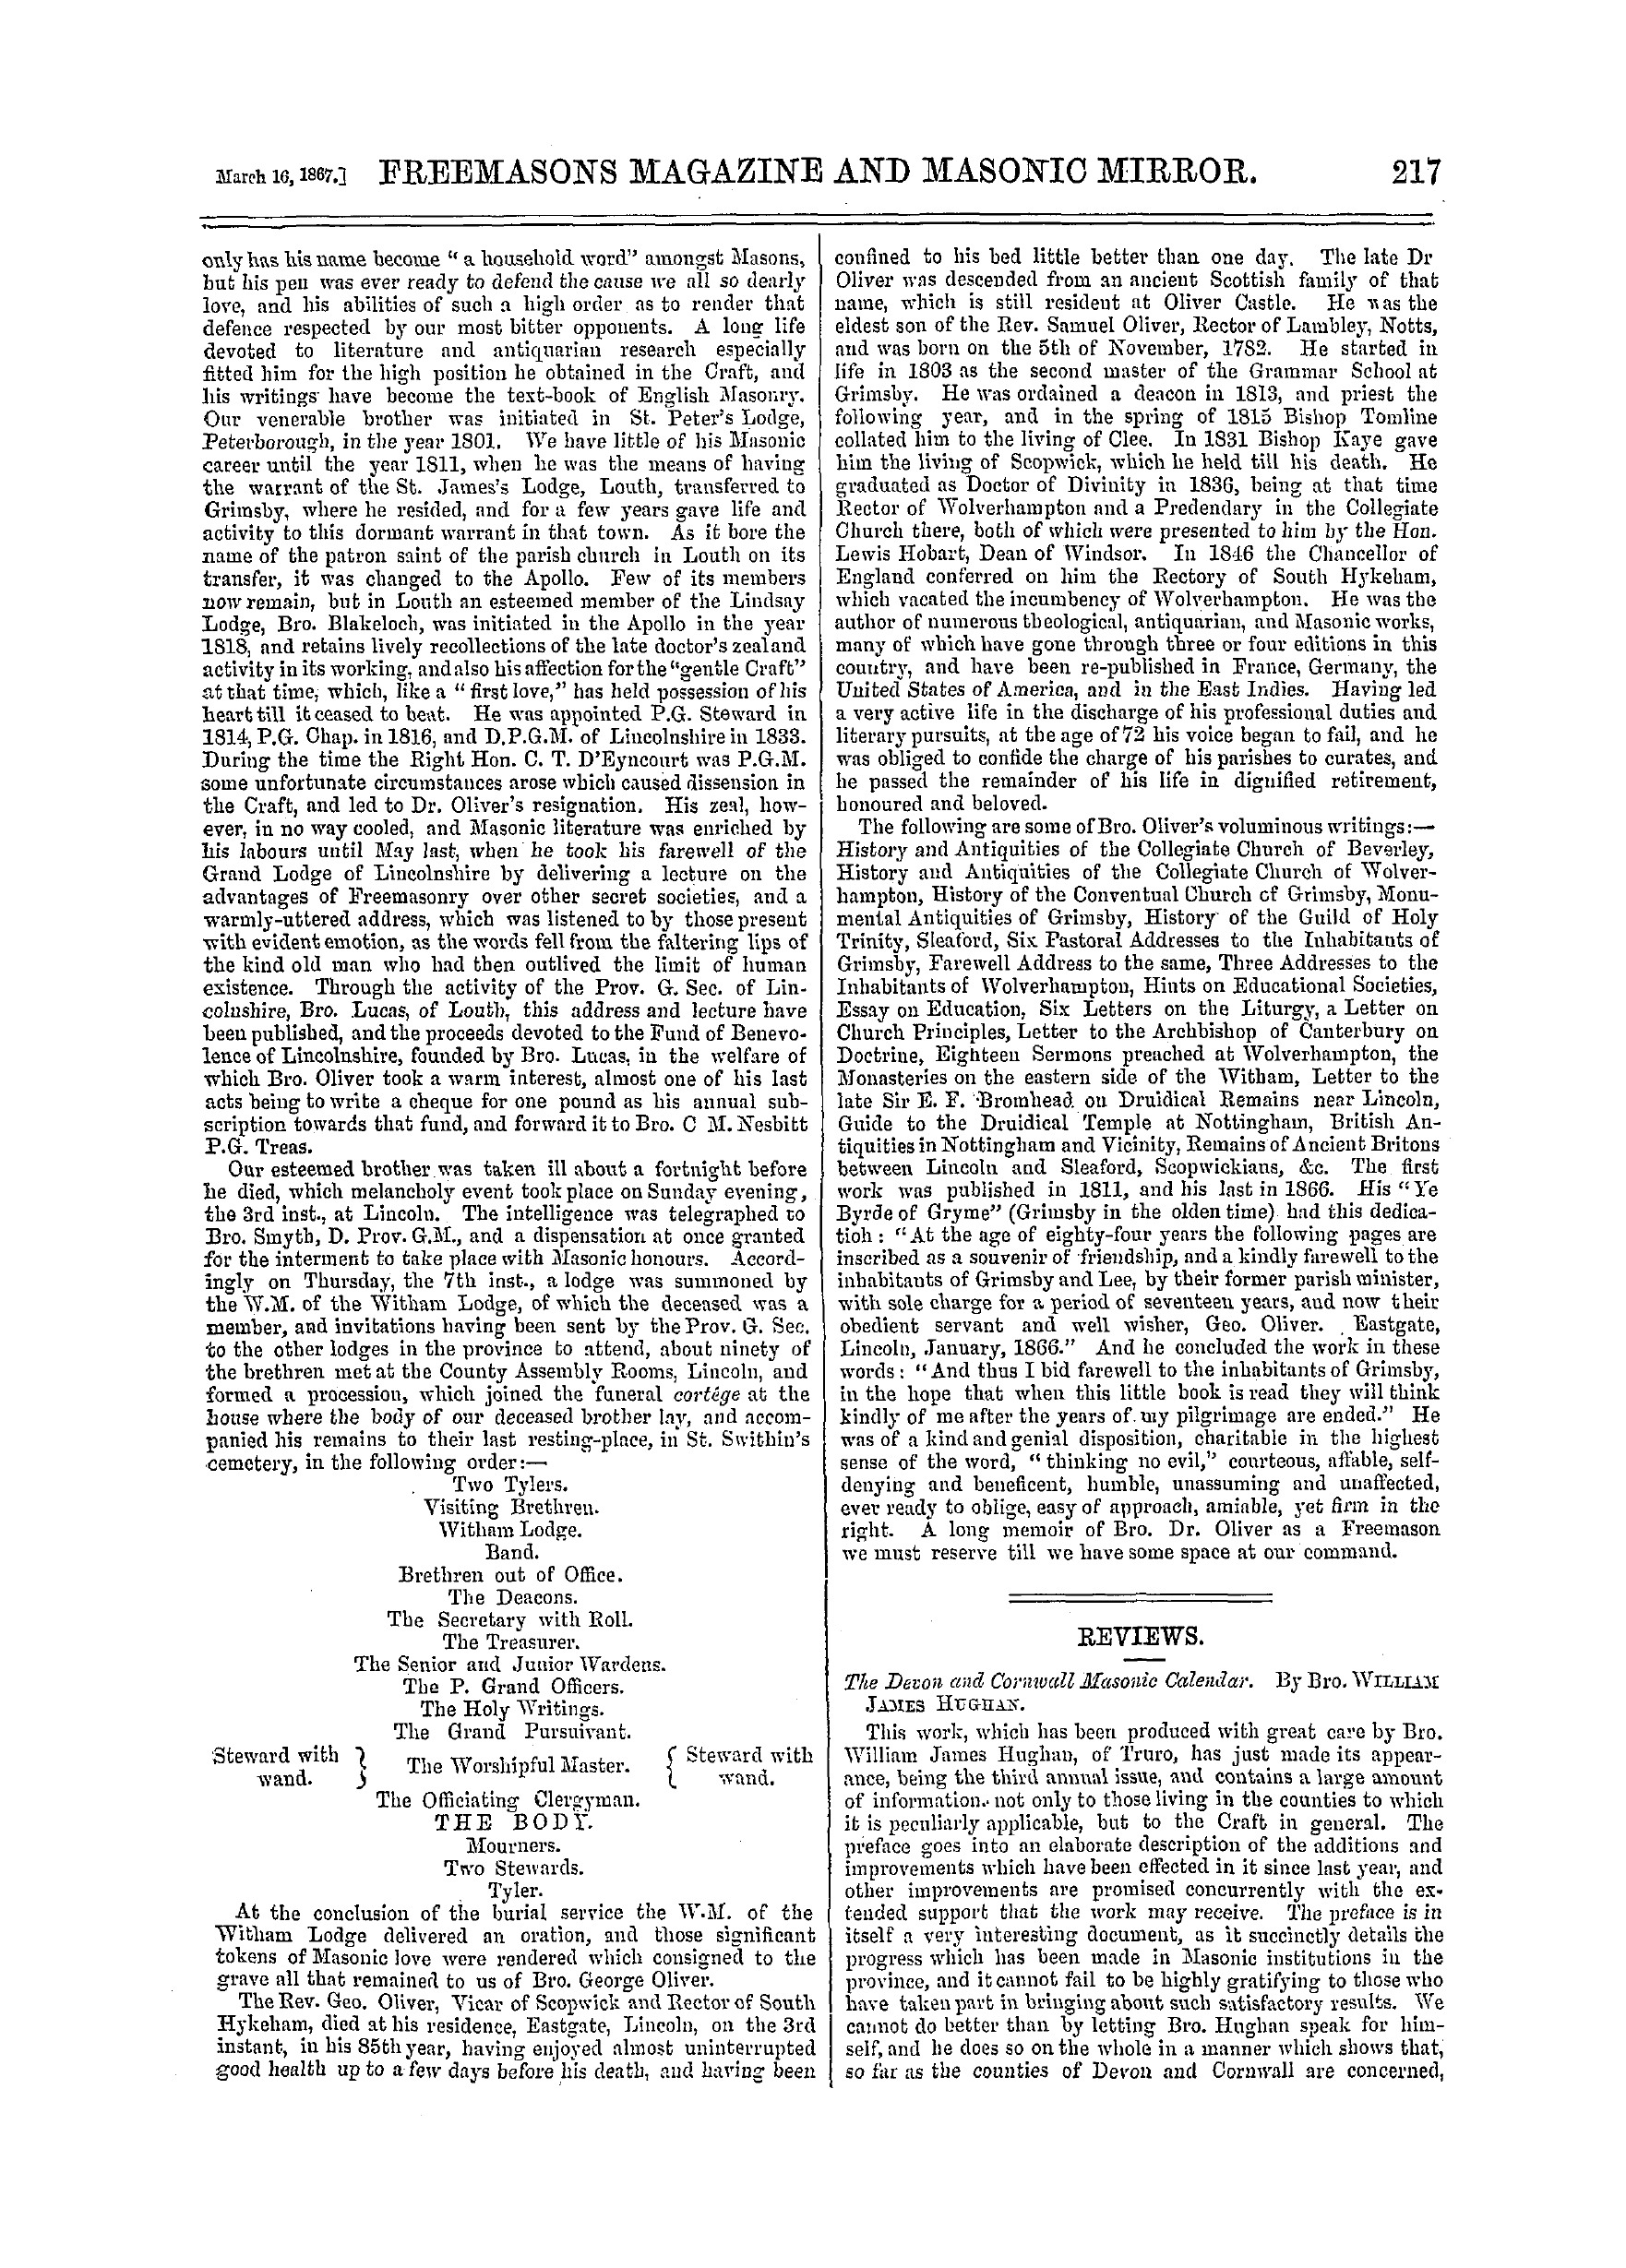 The Freemasons' Monthly Magazine: 1867-03-16 - Reviews.